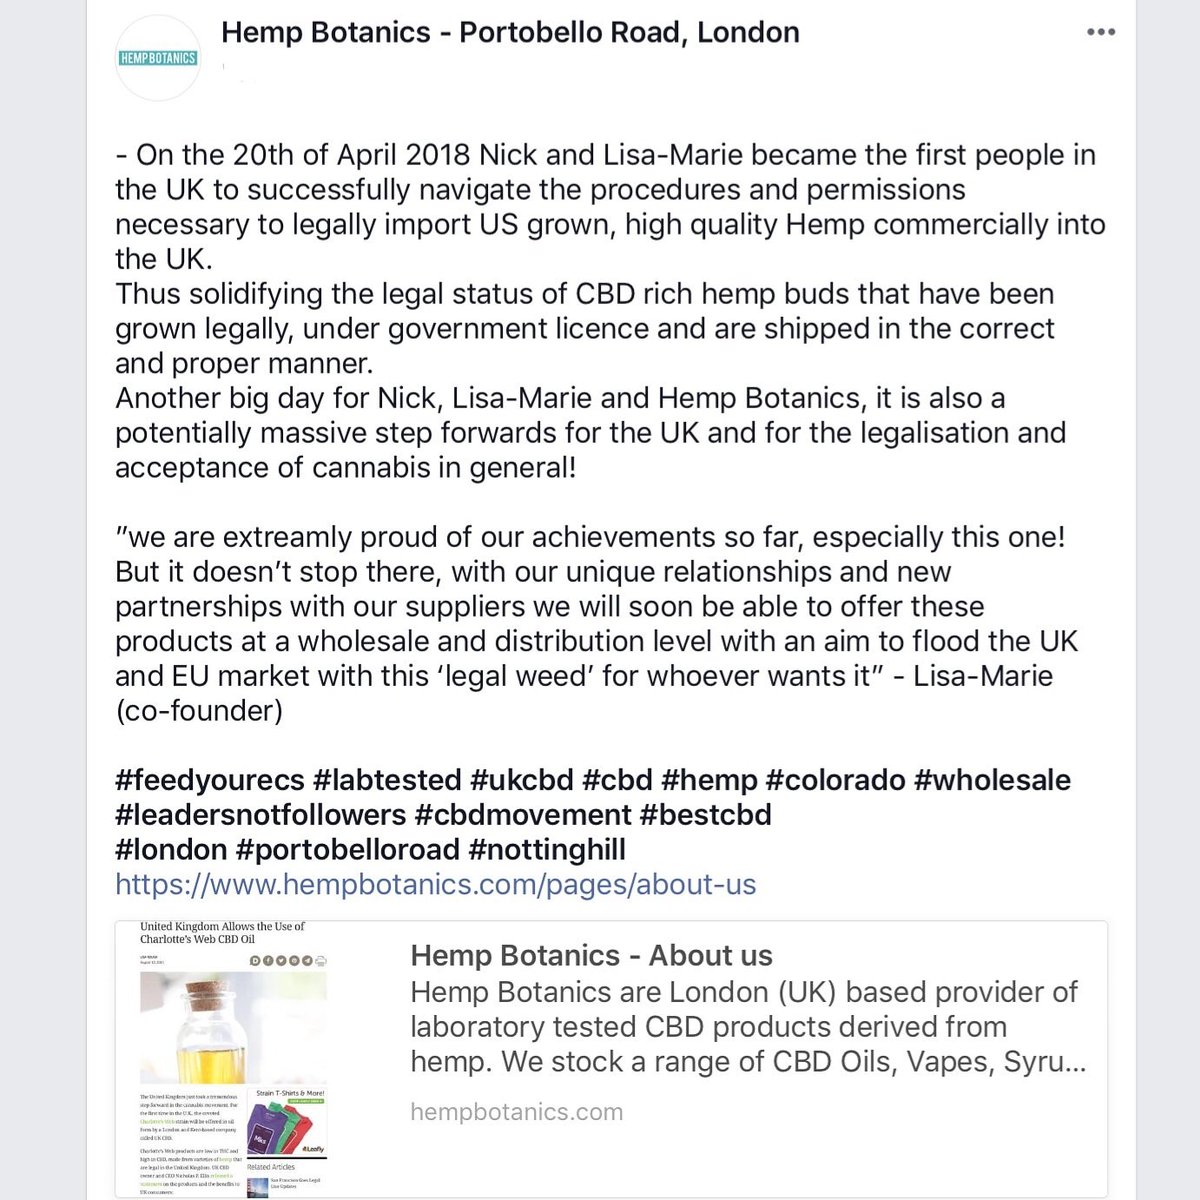 We are very proud of this one. #feedyourecs #hemp #hempflowers #hempbud #cbd #bestcbd #leadersnotfollowers #london #portobelloroad #shop #wholesale #bulk #flower #qualityfirst #uk